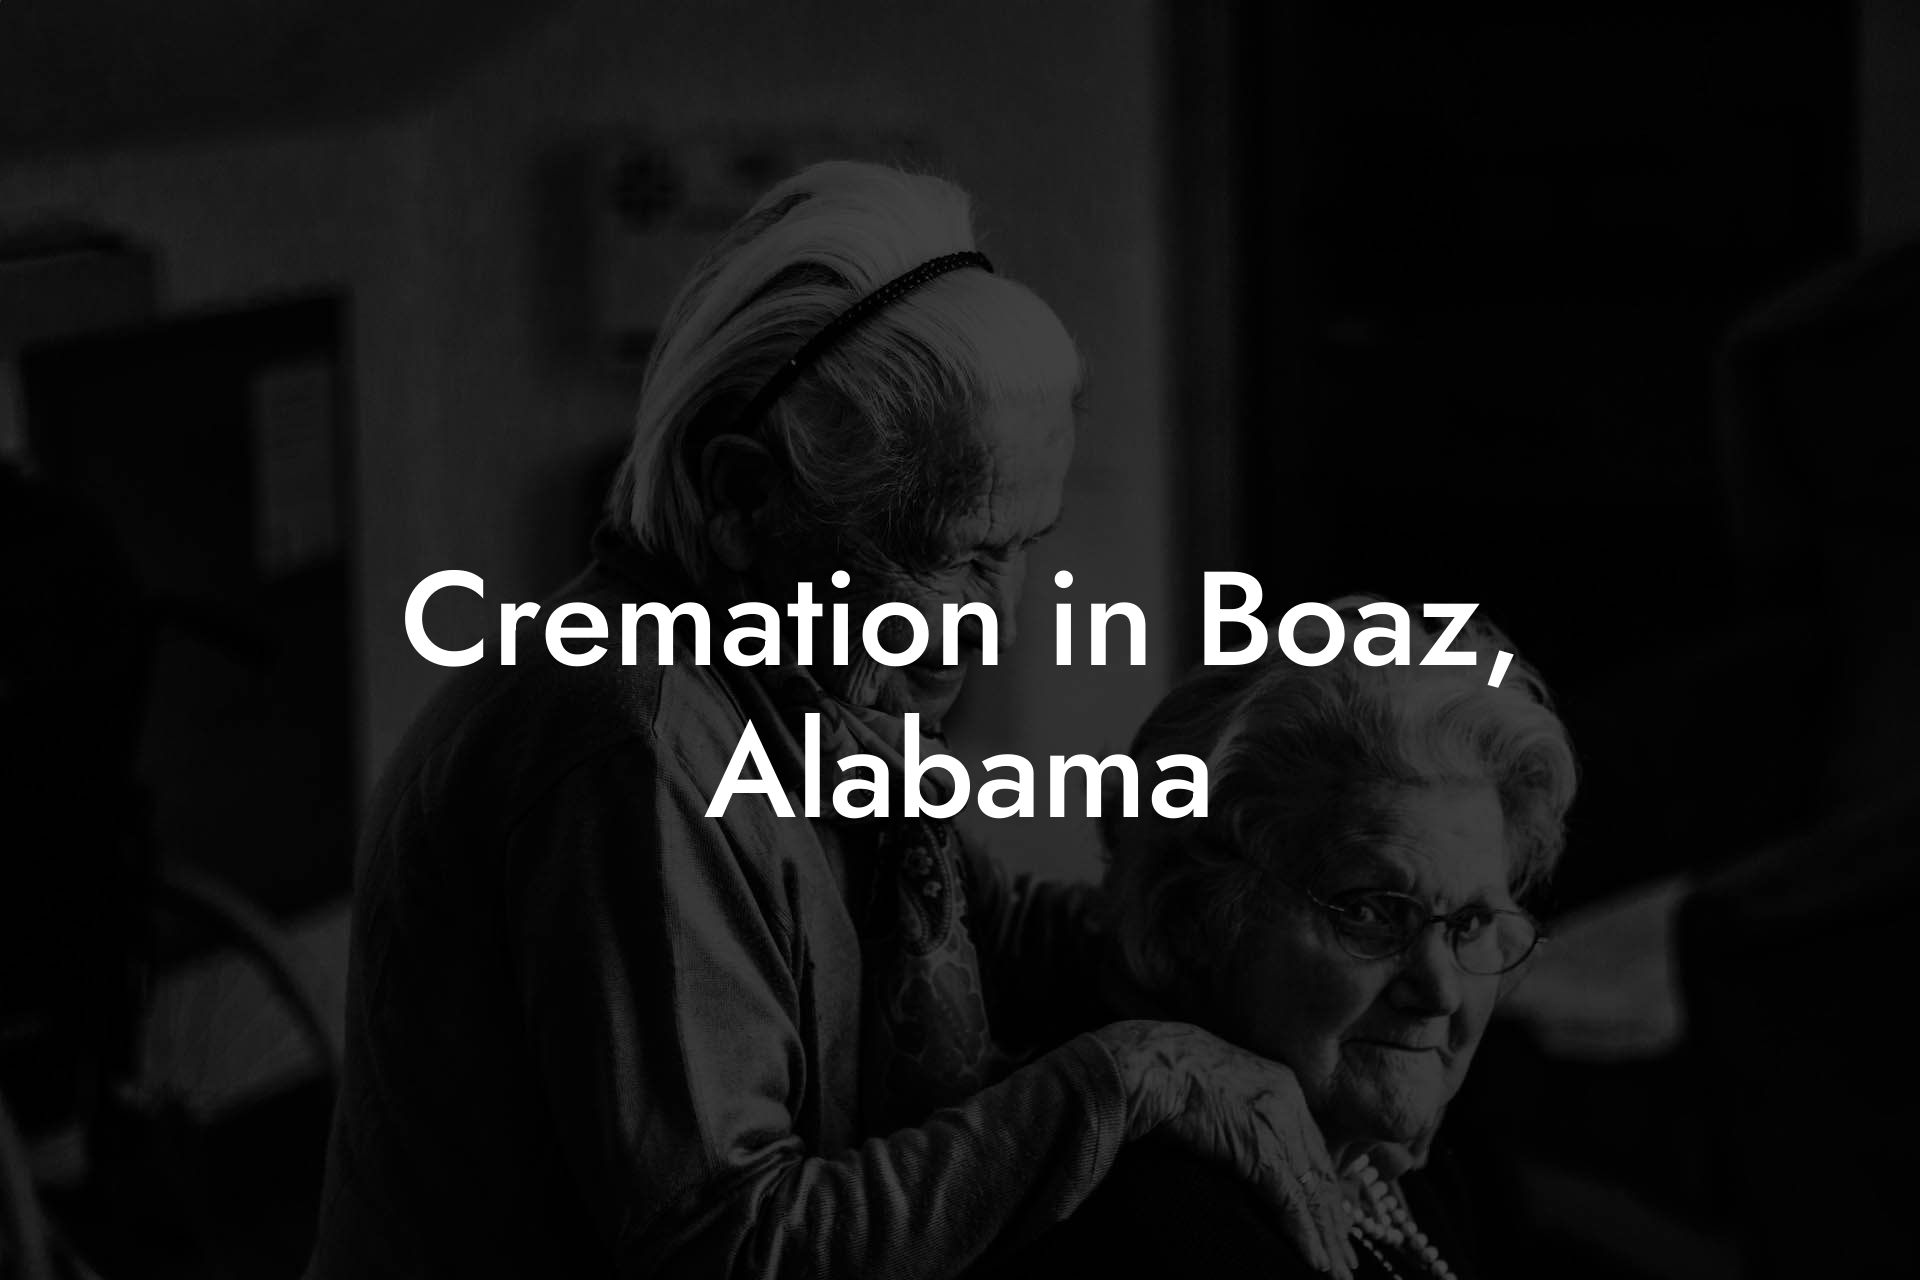 Cremation in Boaz, Alabama